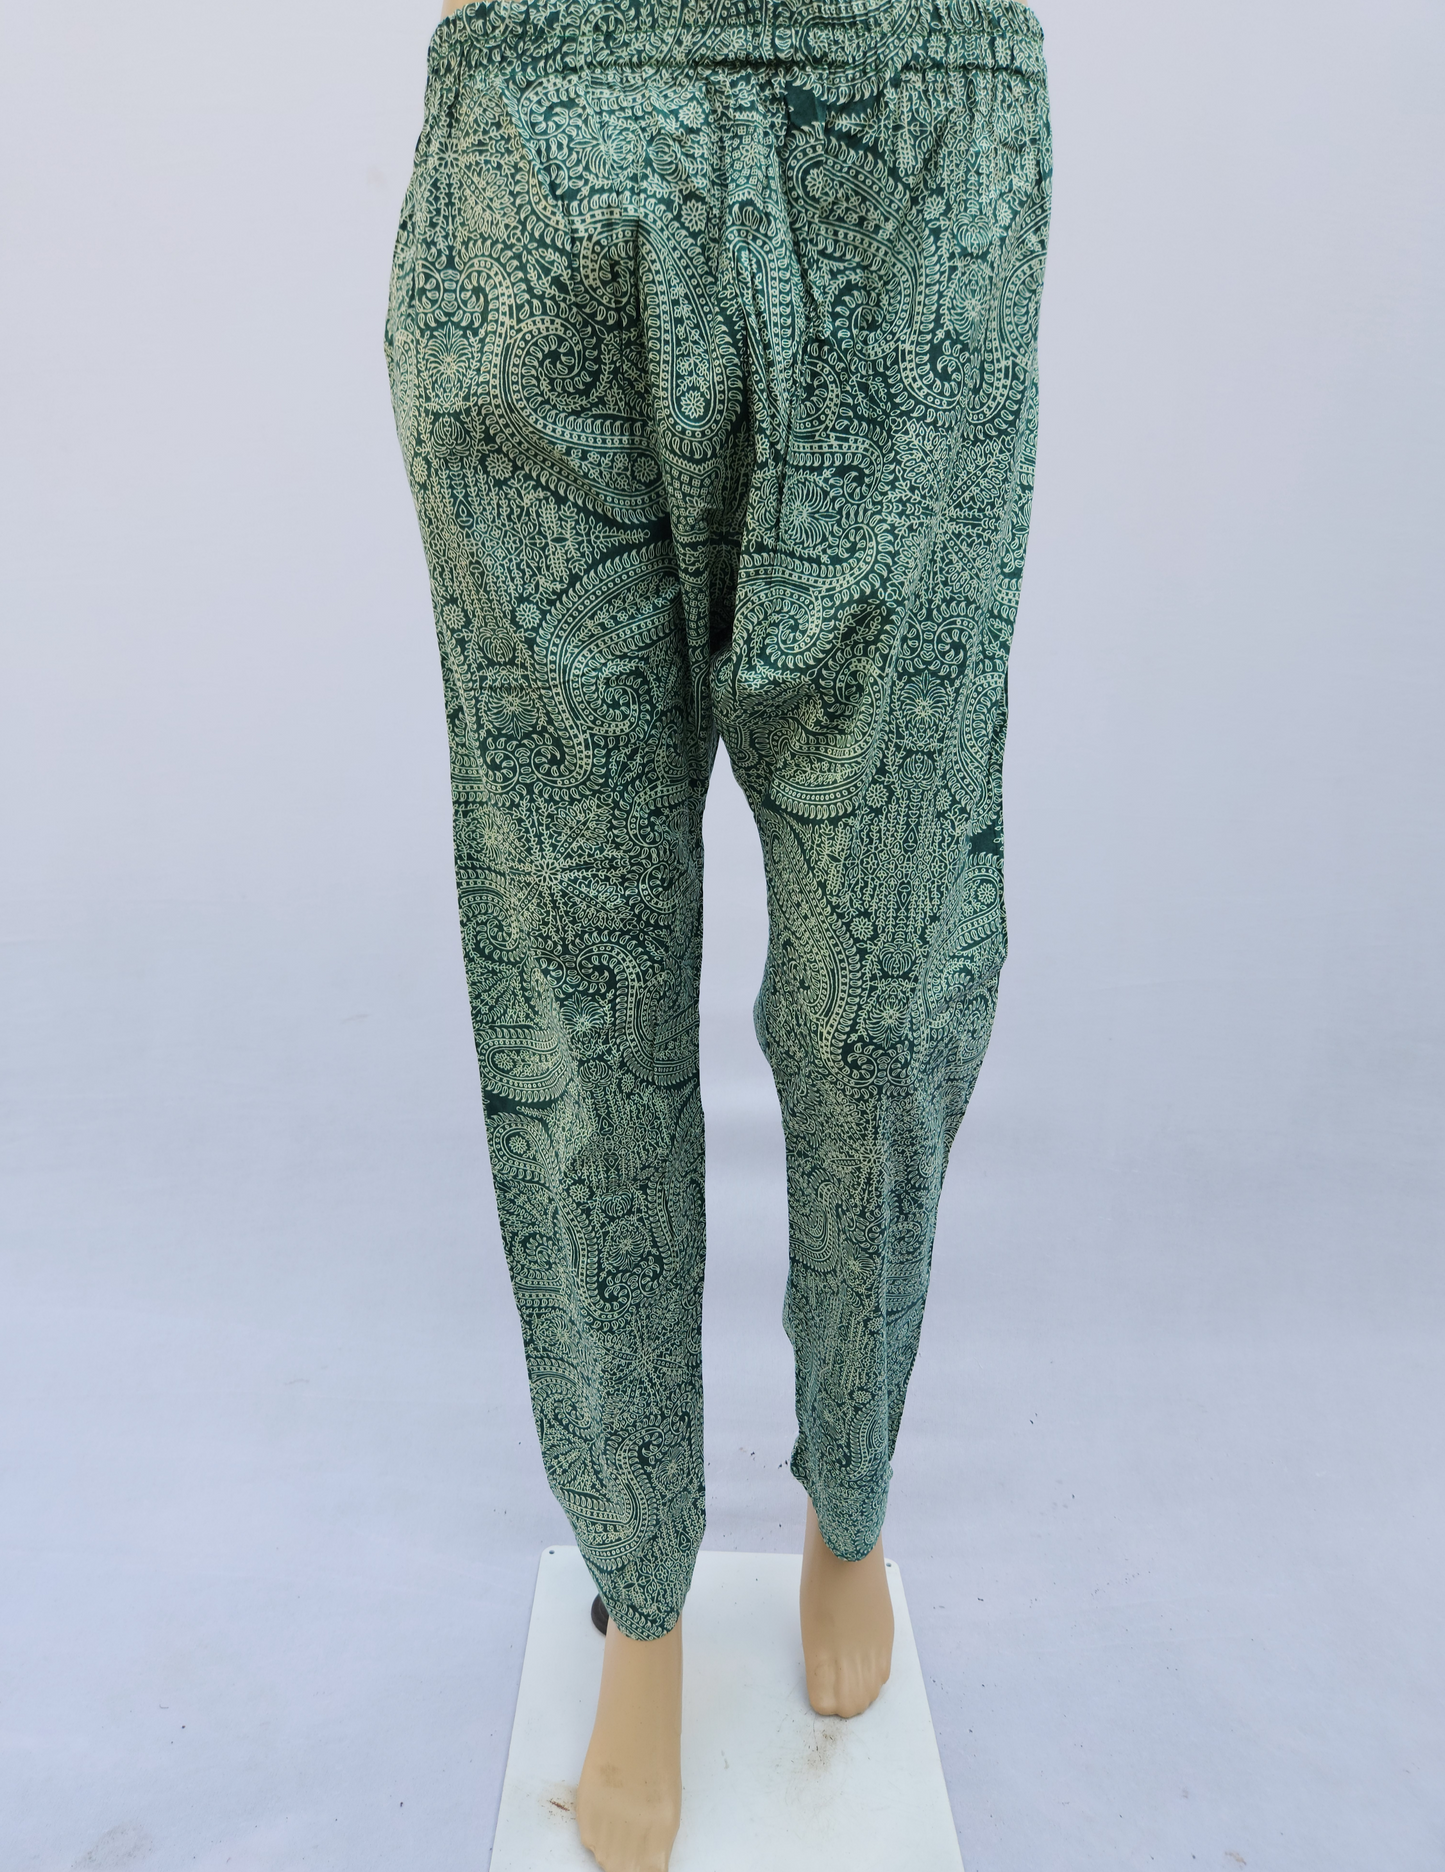 Green Pure Cotton Hand Block Printed Co-Ord Kurthi Set for women  |  Stylish Kurthis & Kurtis Sets for Women  |  Threyas 